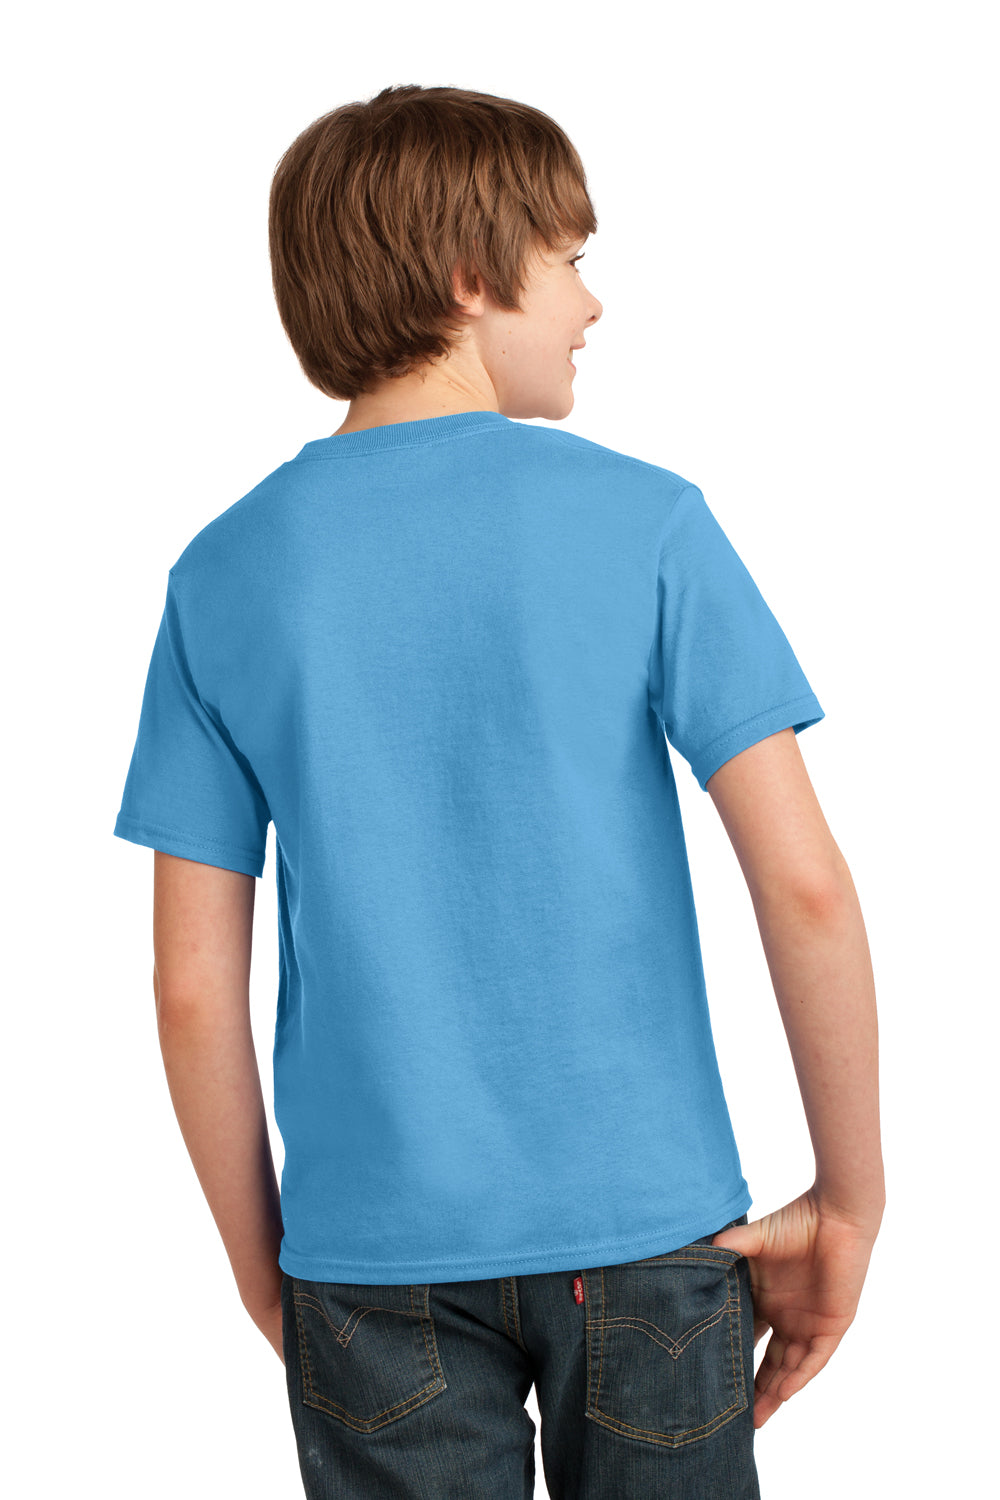 Port & Company PC61Y Youth Essential Short Sleeve Crewneck T-Shirt Aqua Blue Back